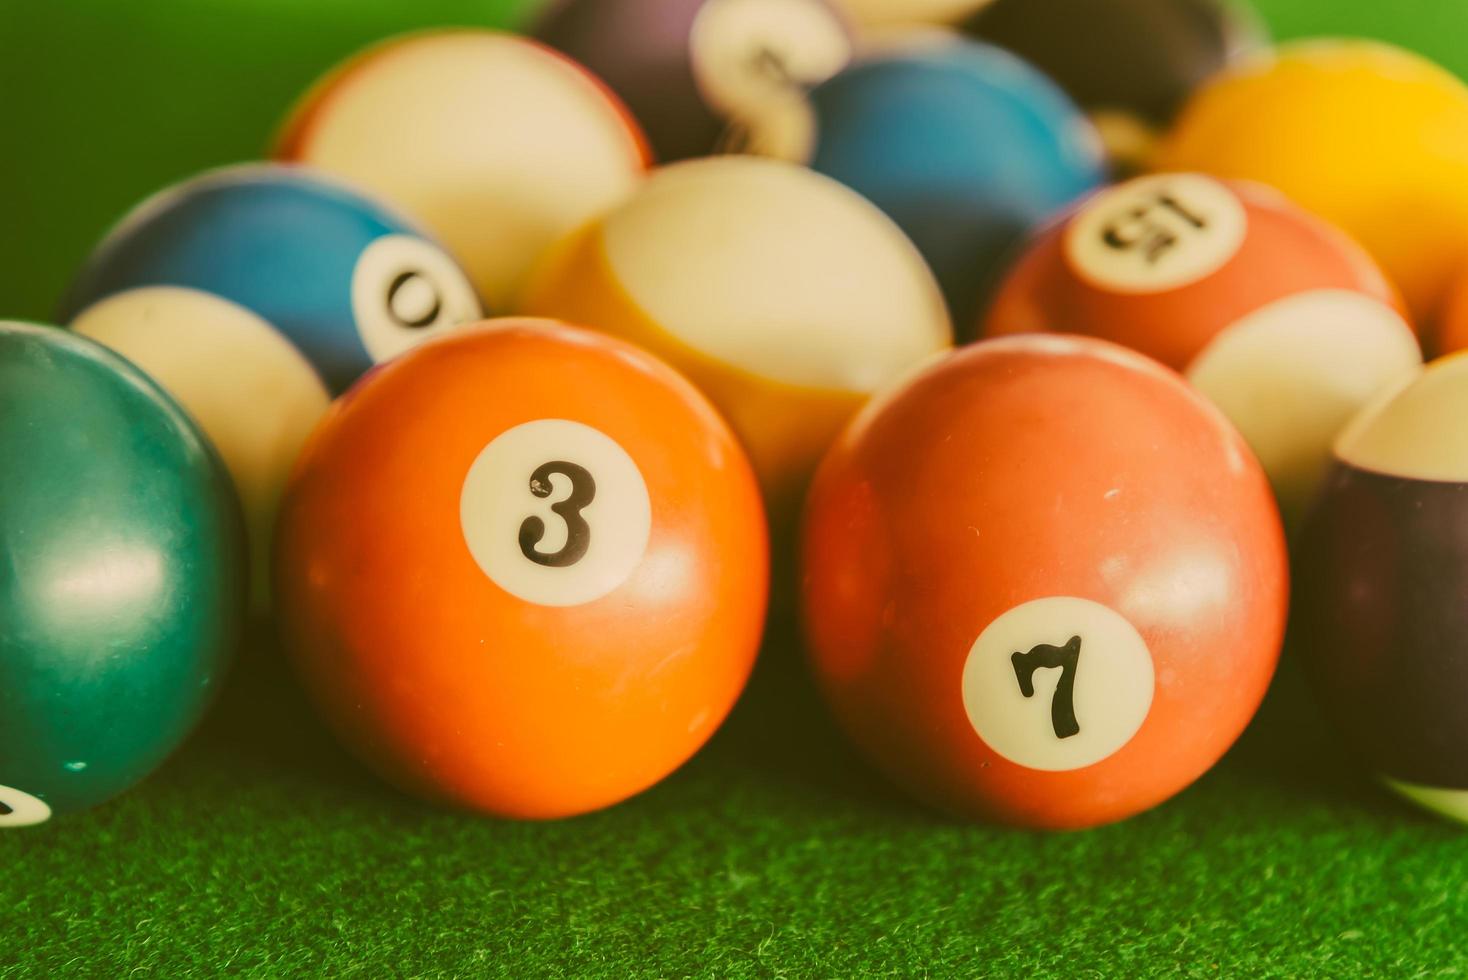 Billiards balls close-up photo